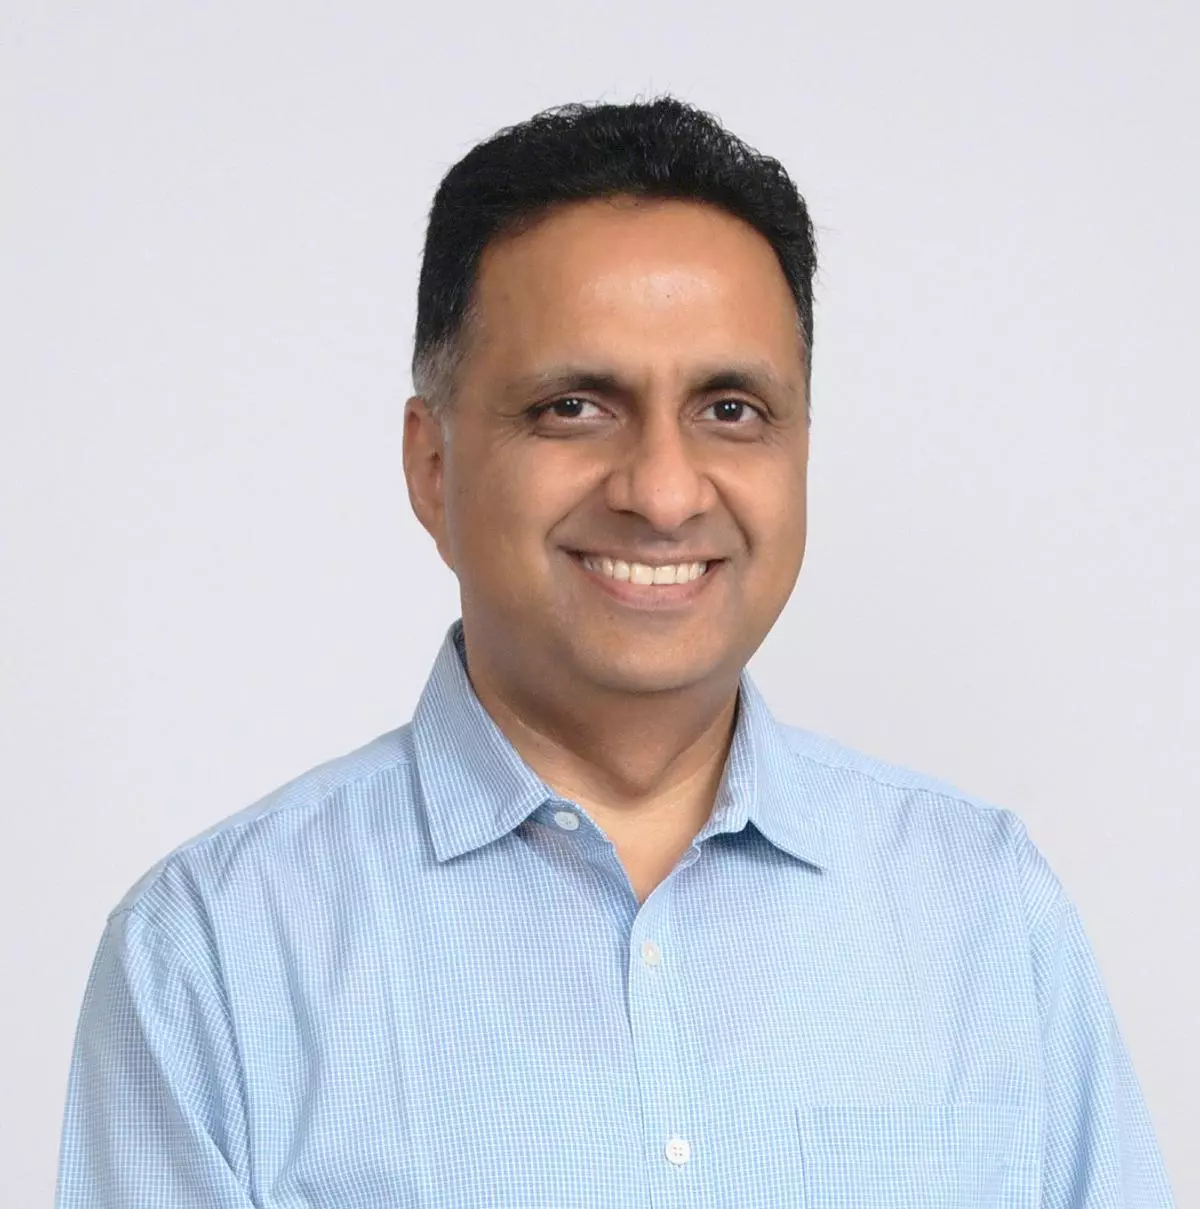  Samir Dhir, CEO at Sonata Software.